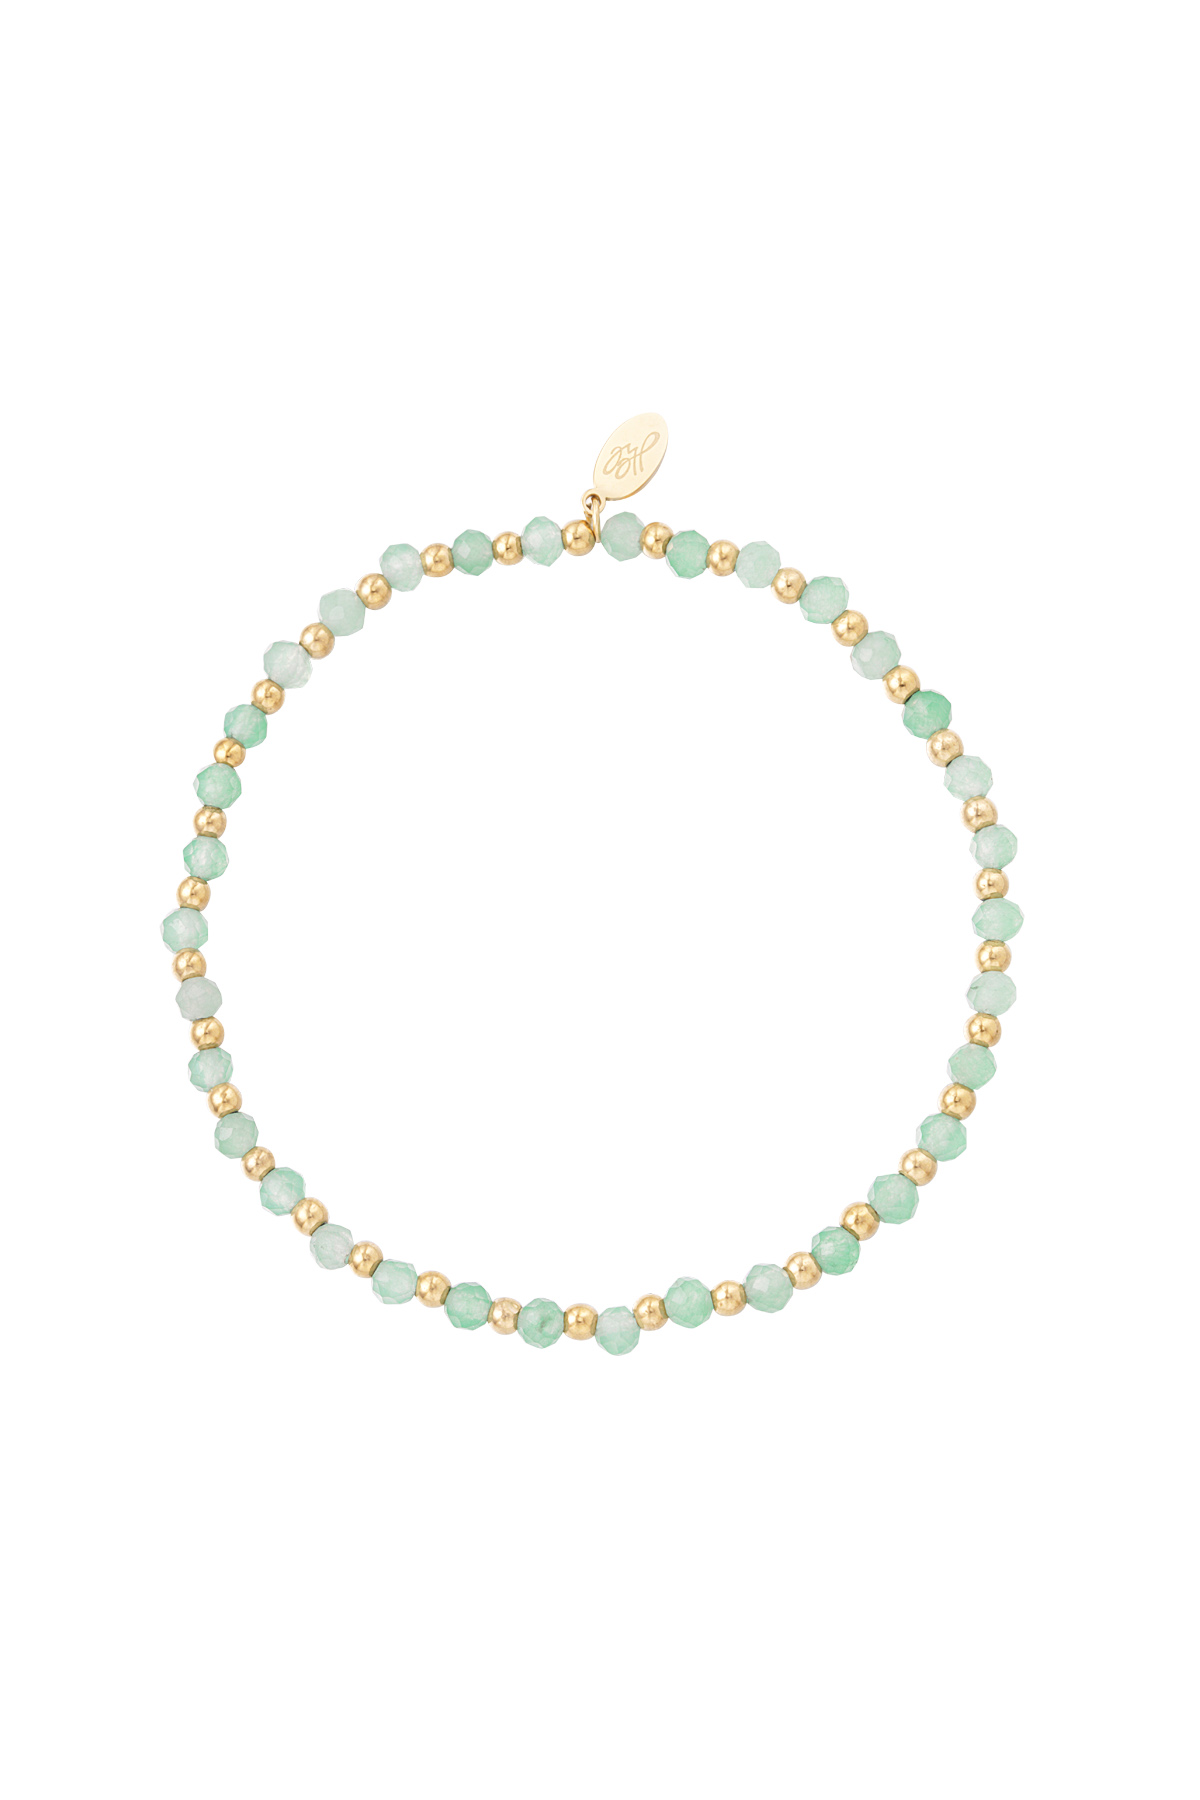 Vert & Or / Bracelet perles - vert clair/doré Image8